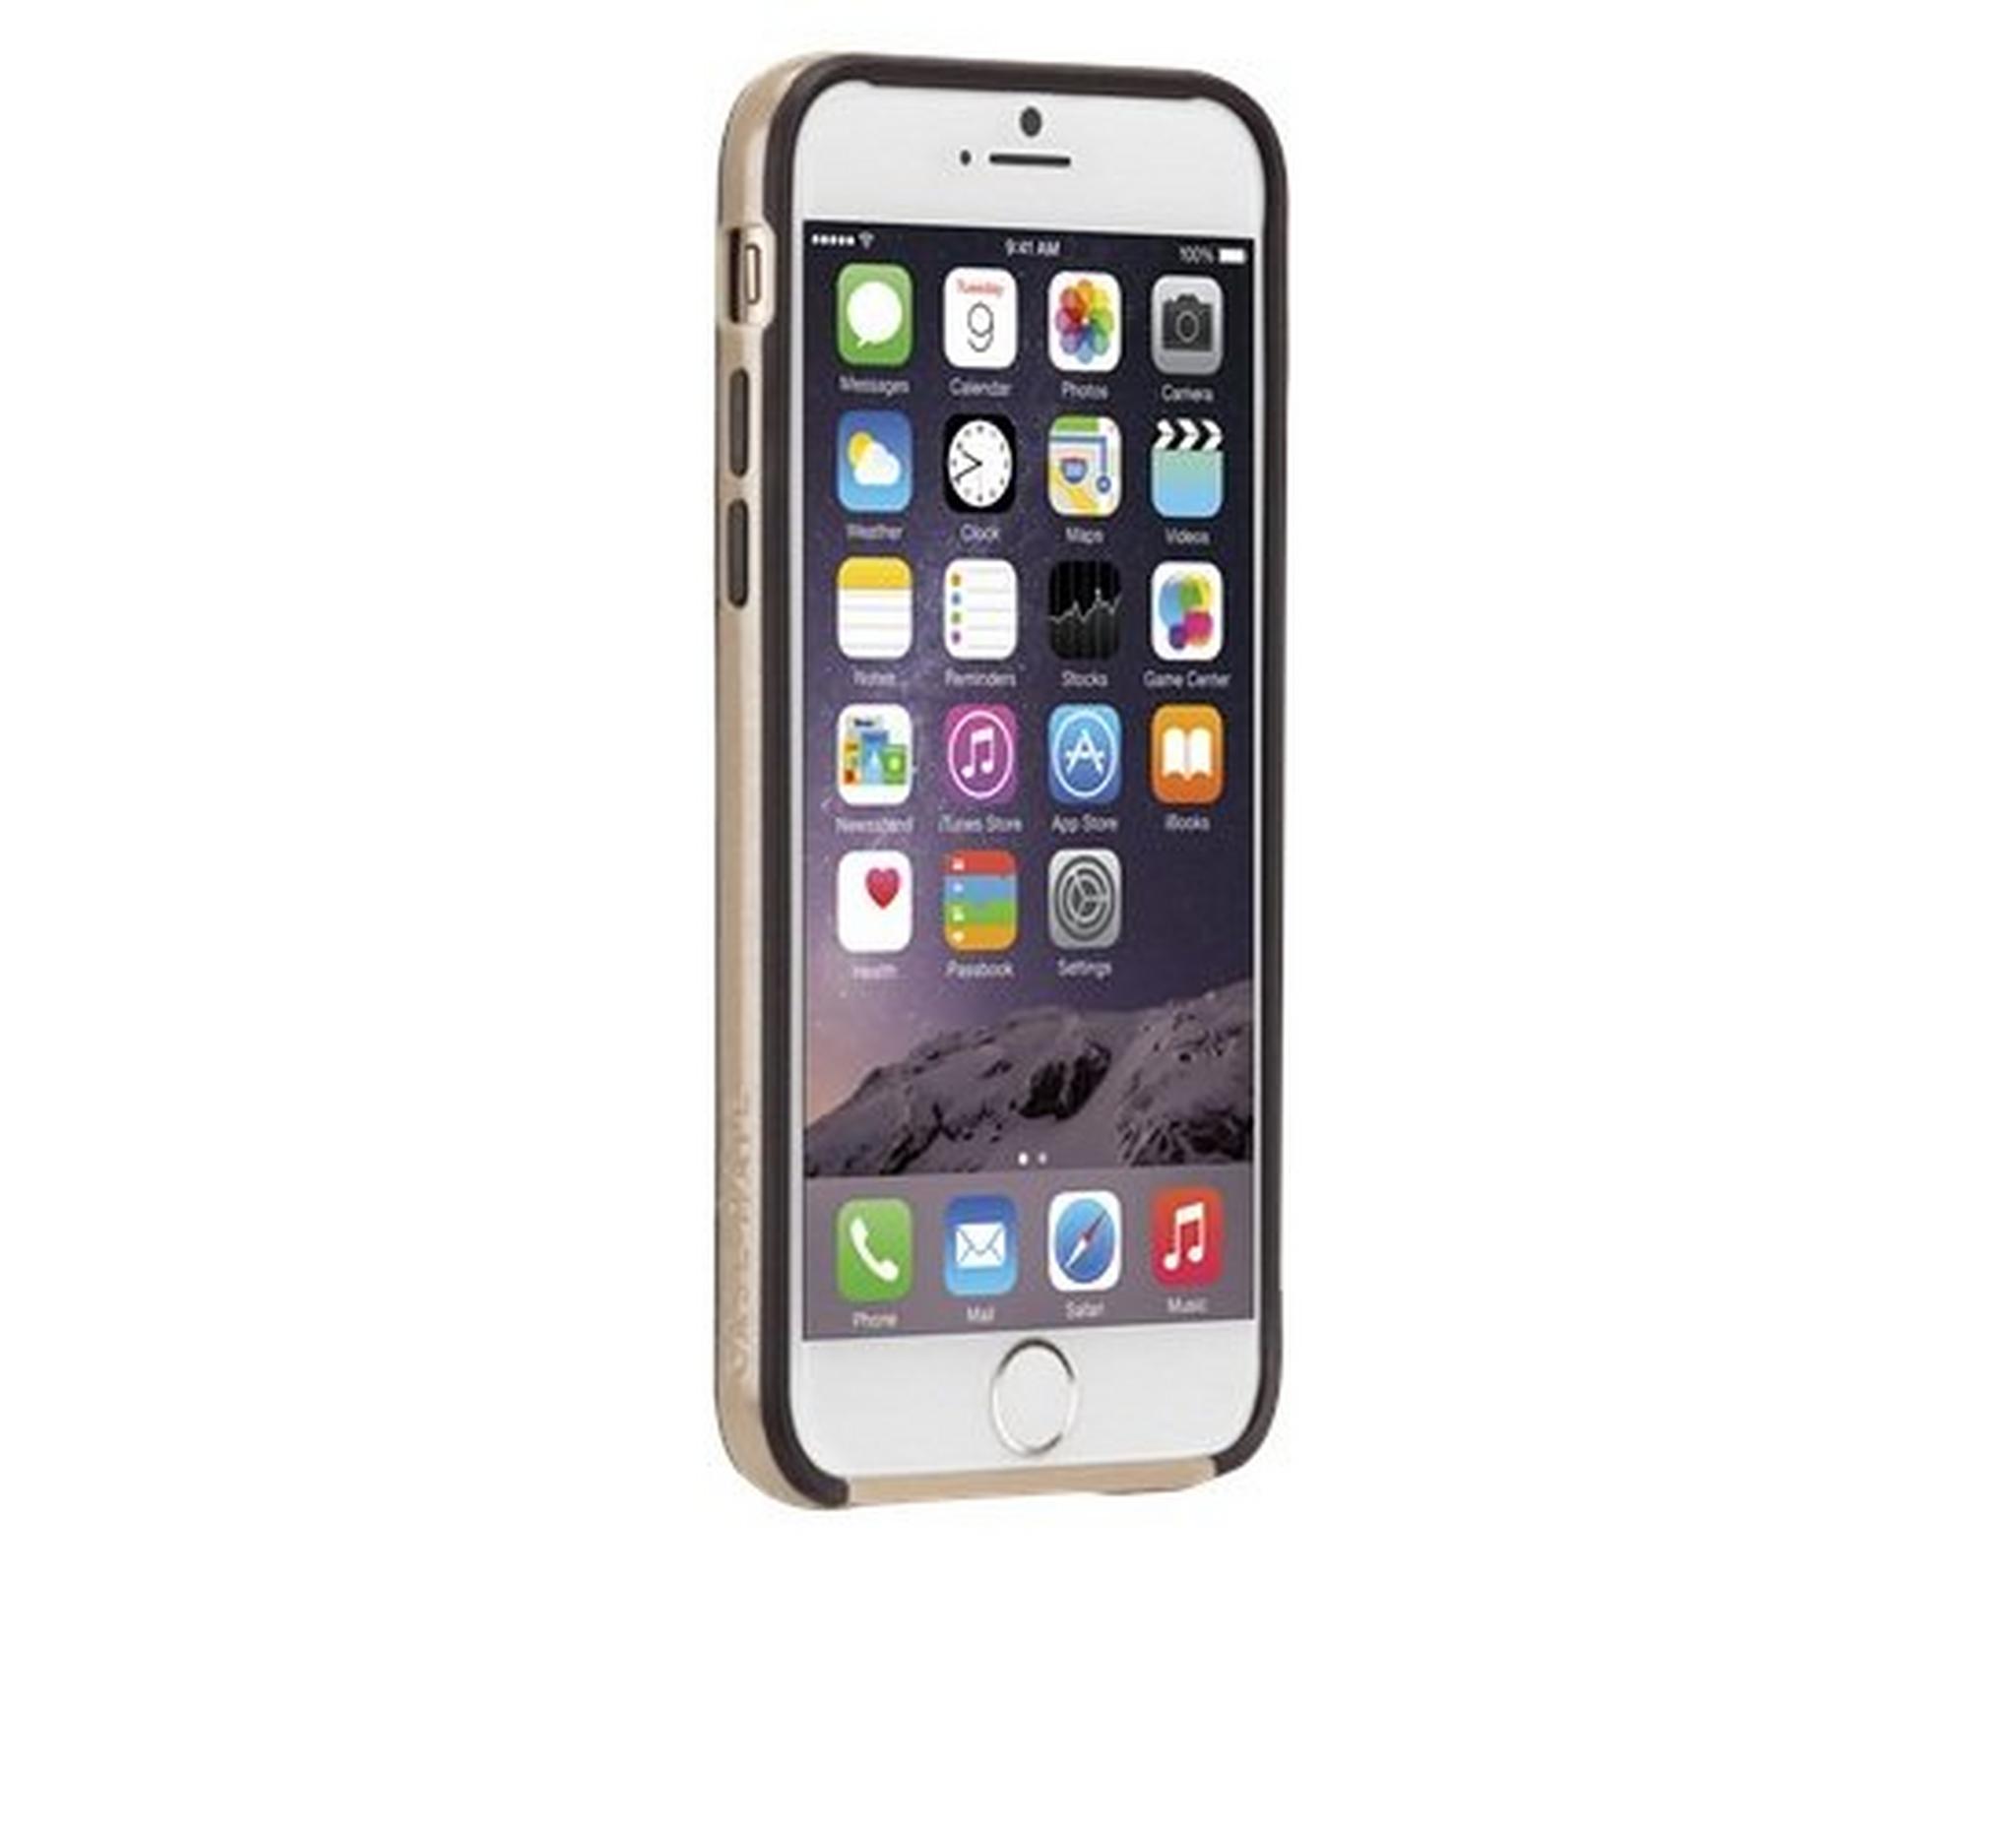 Case Mate Tough Frame Bumper for iPhone 6 - Gold/black